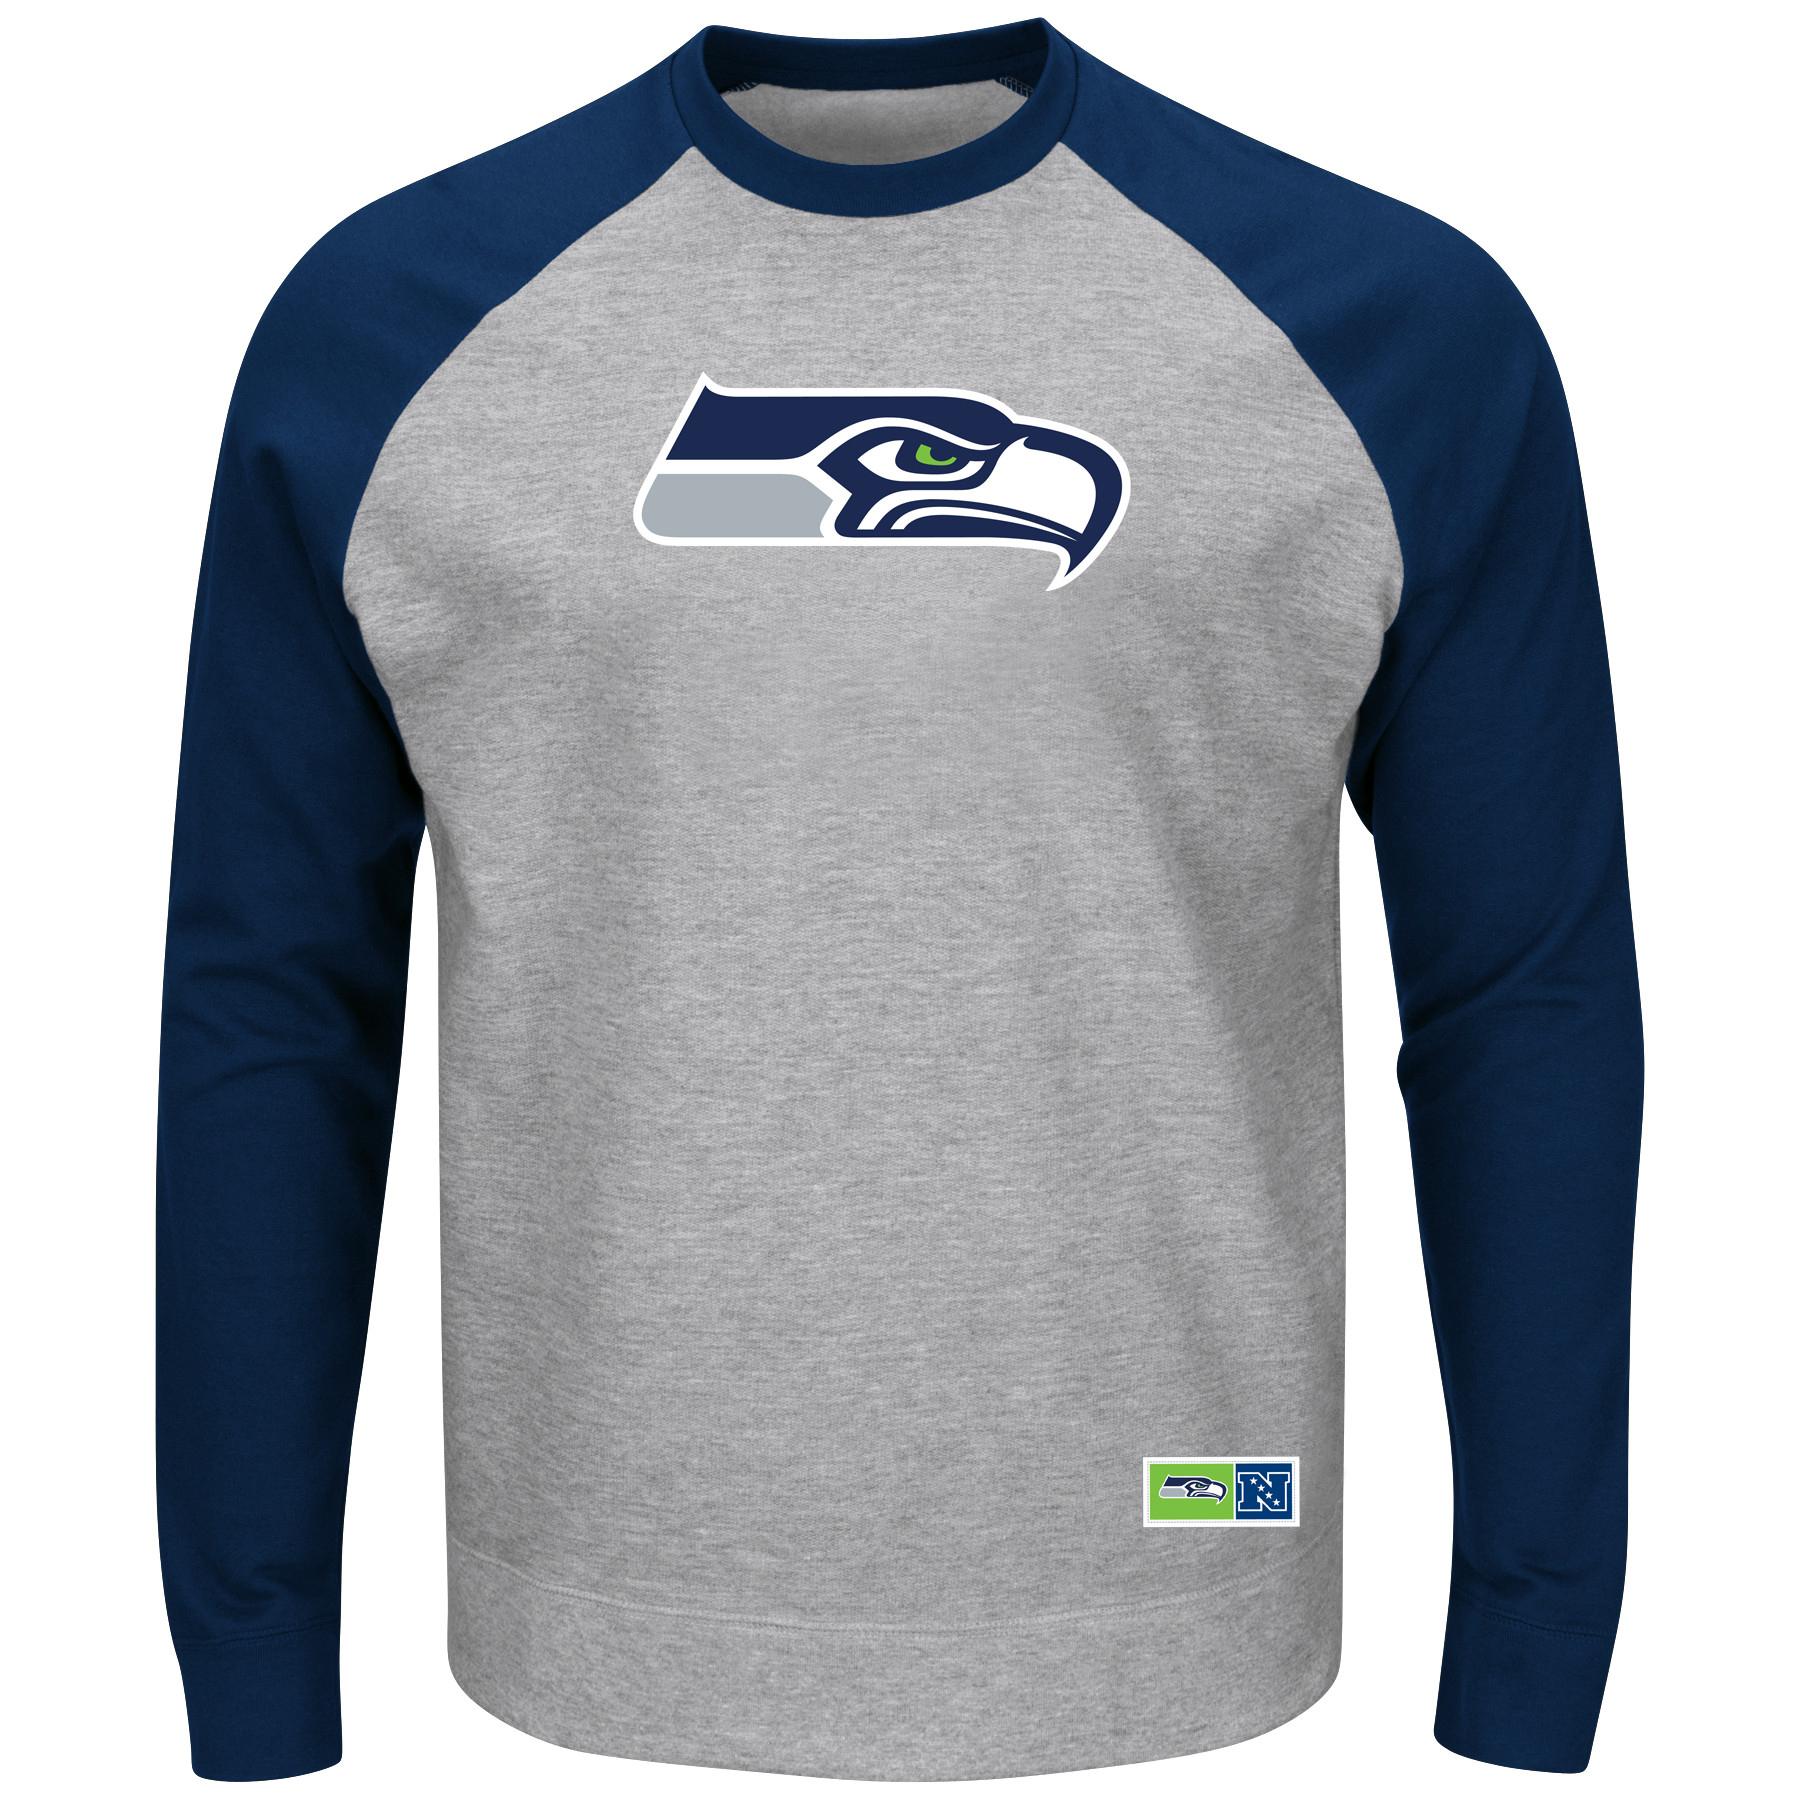 NFL Men's Big & Tall Sweatshirt - Seattle Seahawks